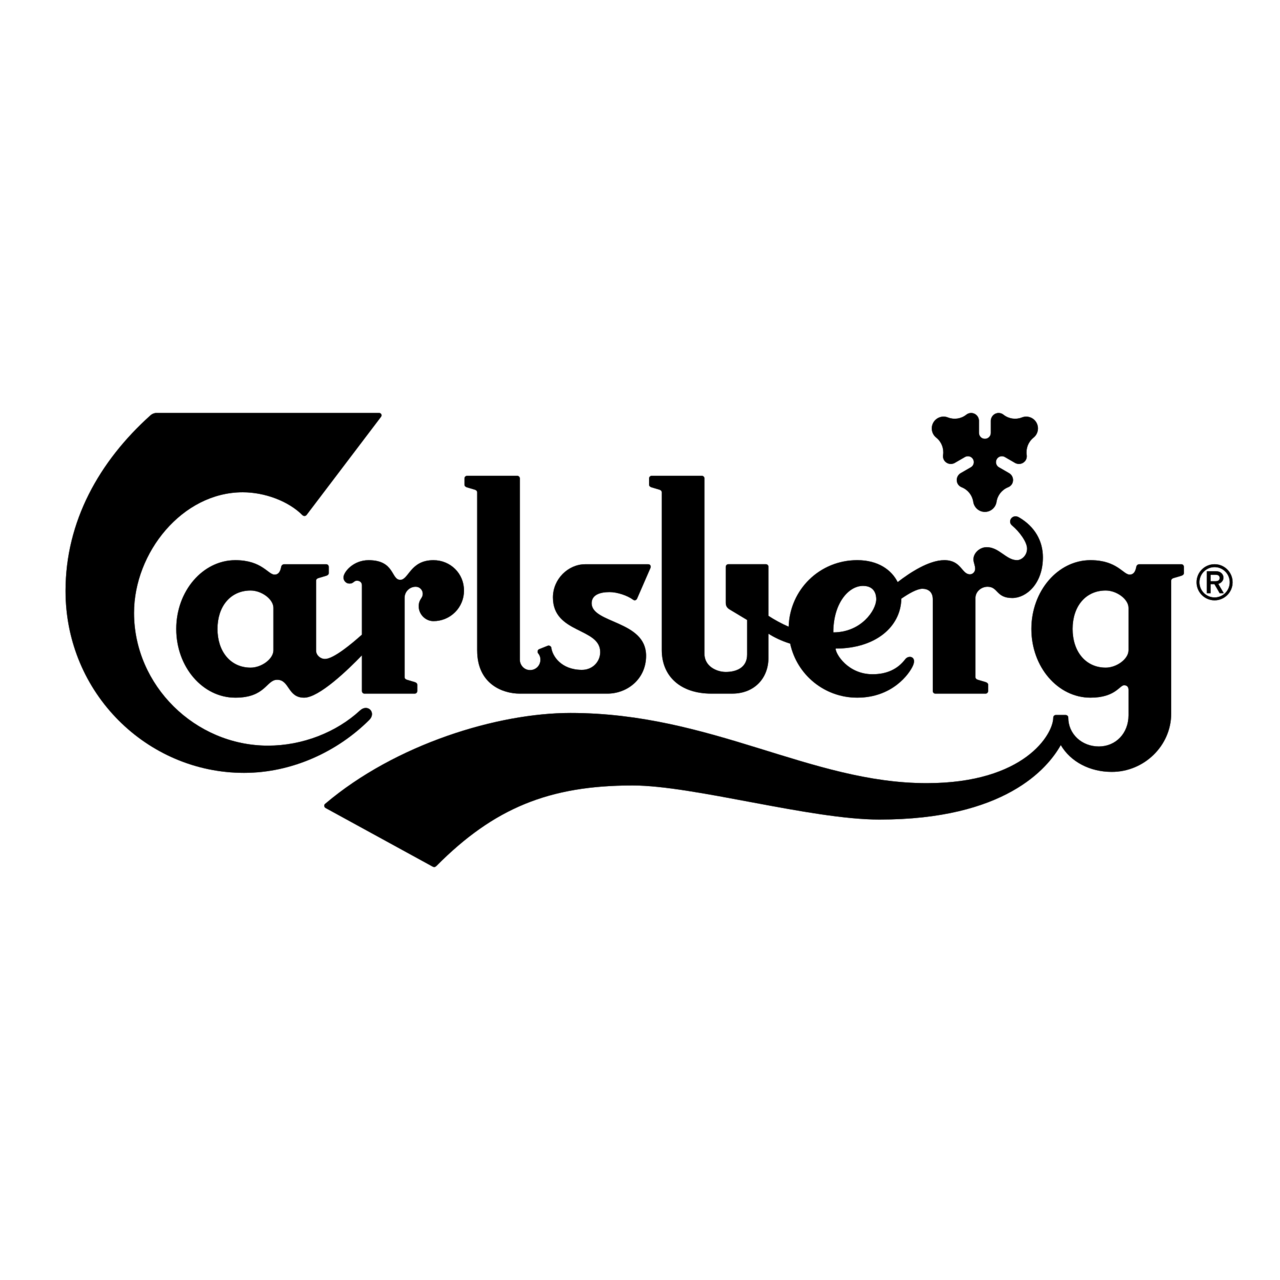 carlsberg-logo-black-and-white